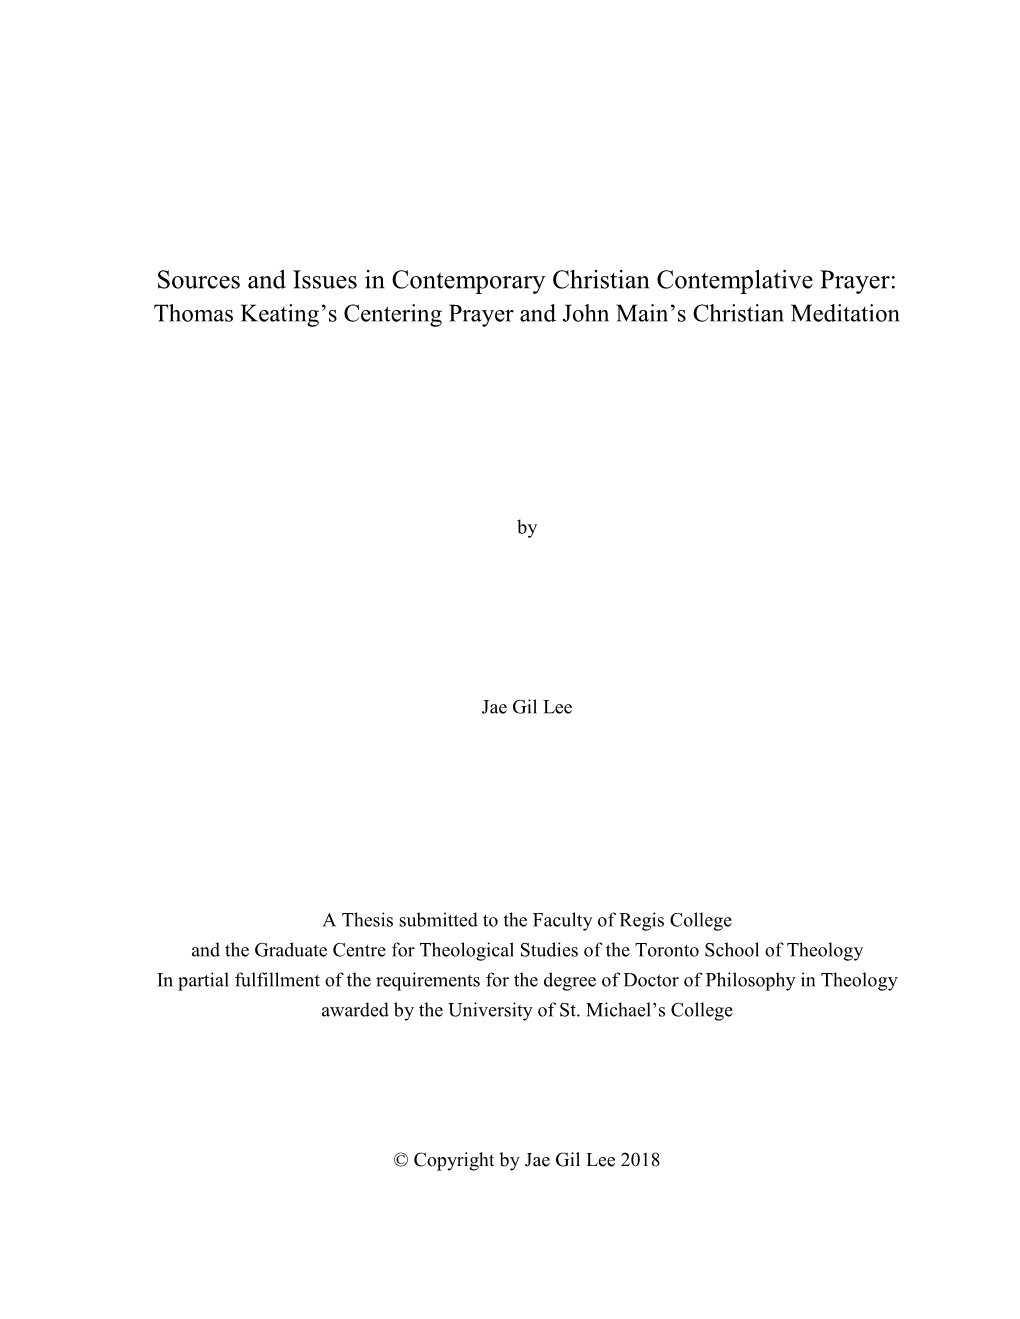 Thomas Keating's Centering Prayer and John Main's Christian Meditation